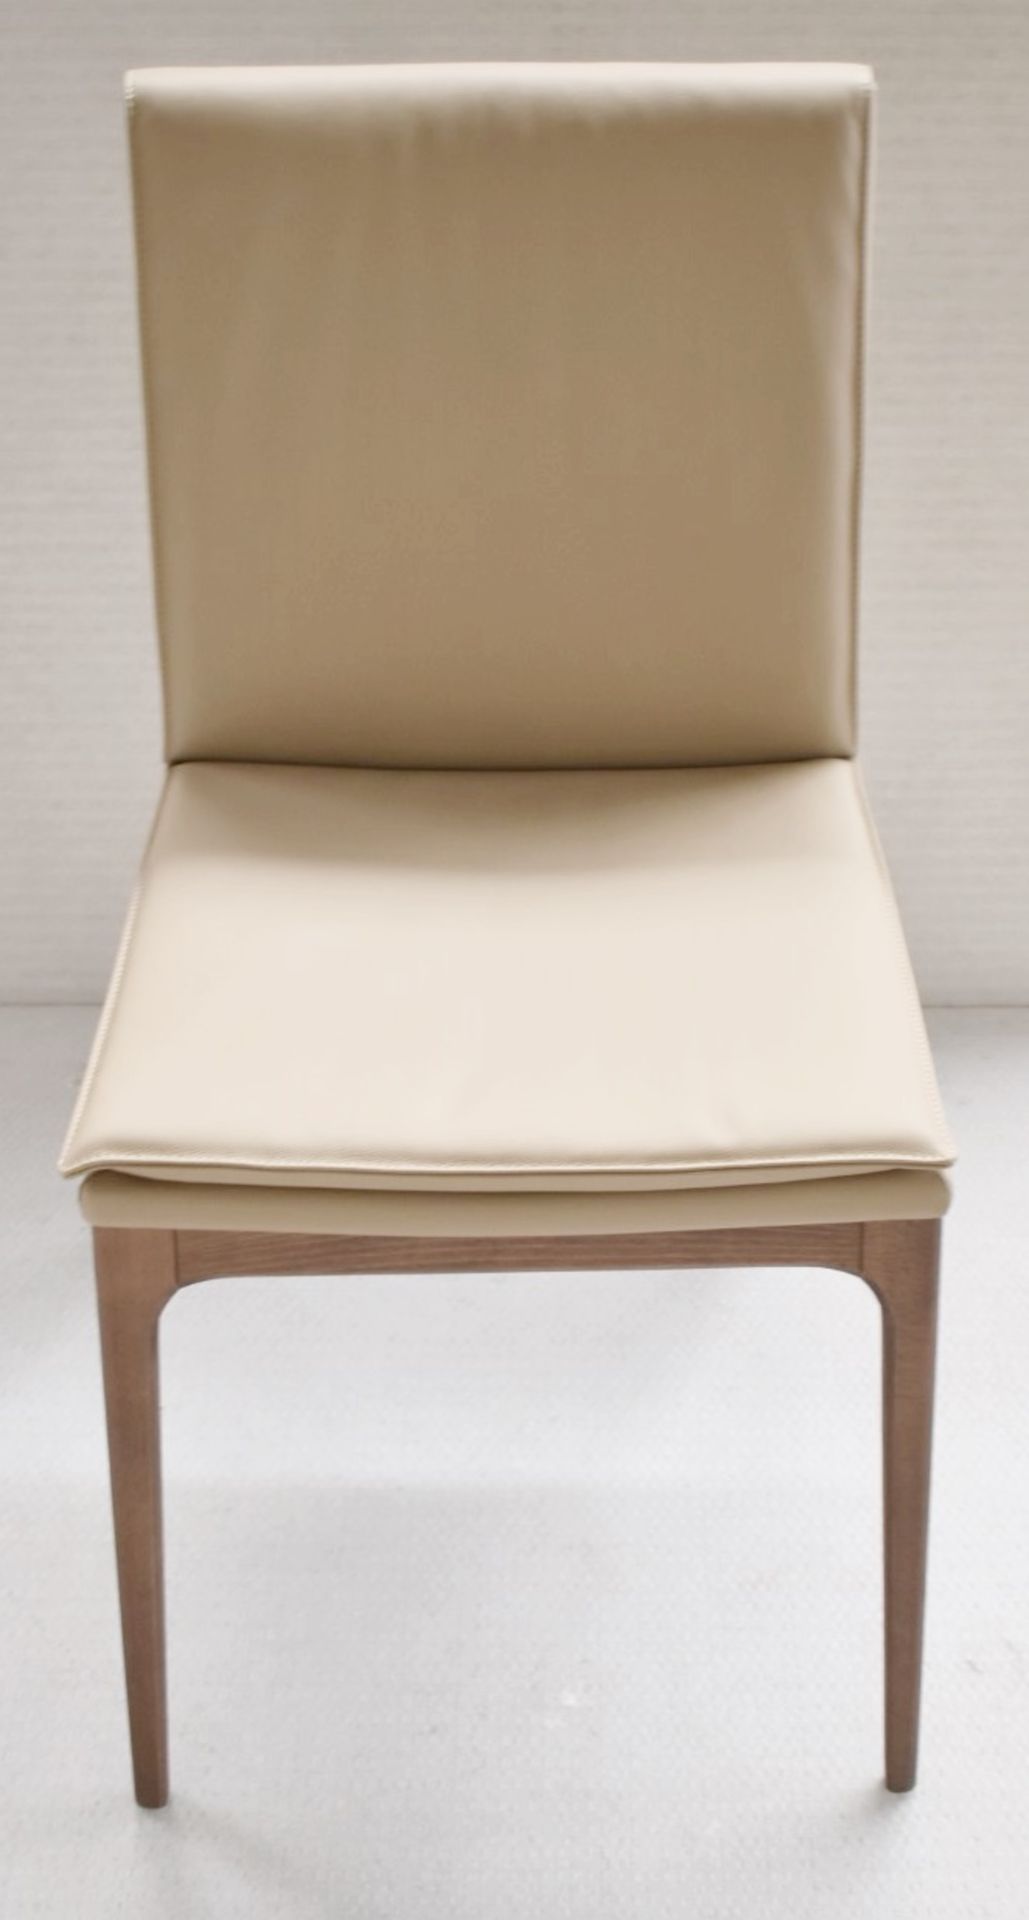 1 x CATTELAN ITALIA 'Sofia' Leather Upholsted Designer Chair - Original RRP £520.00 - Ref: 4934658/ - Image 4 of 9